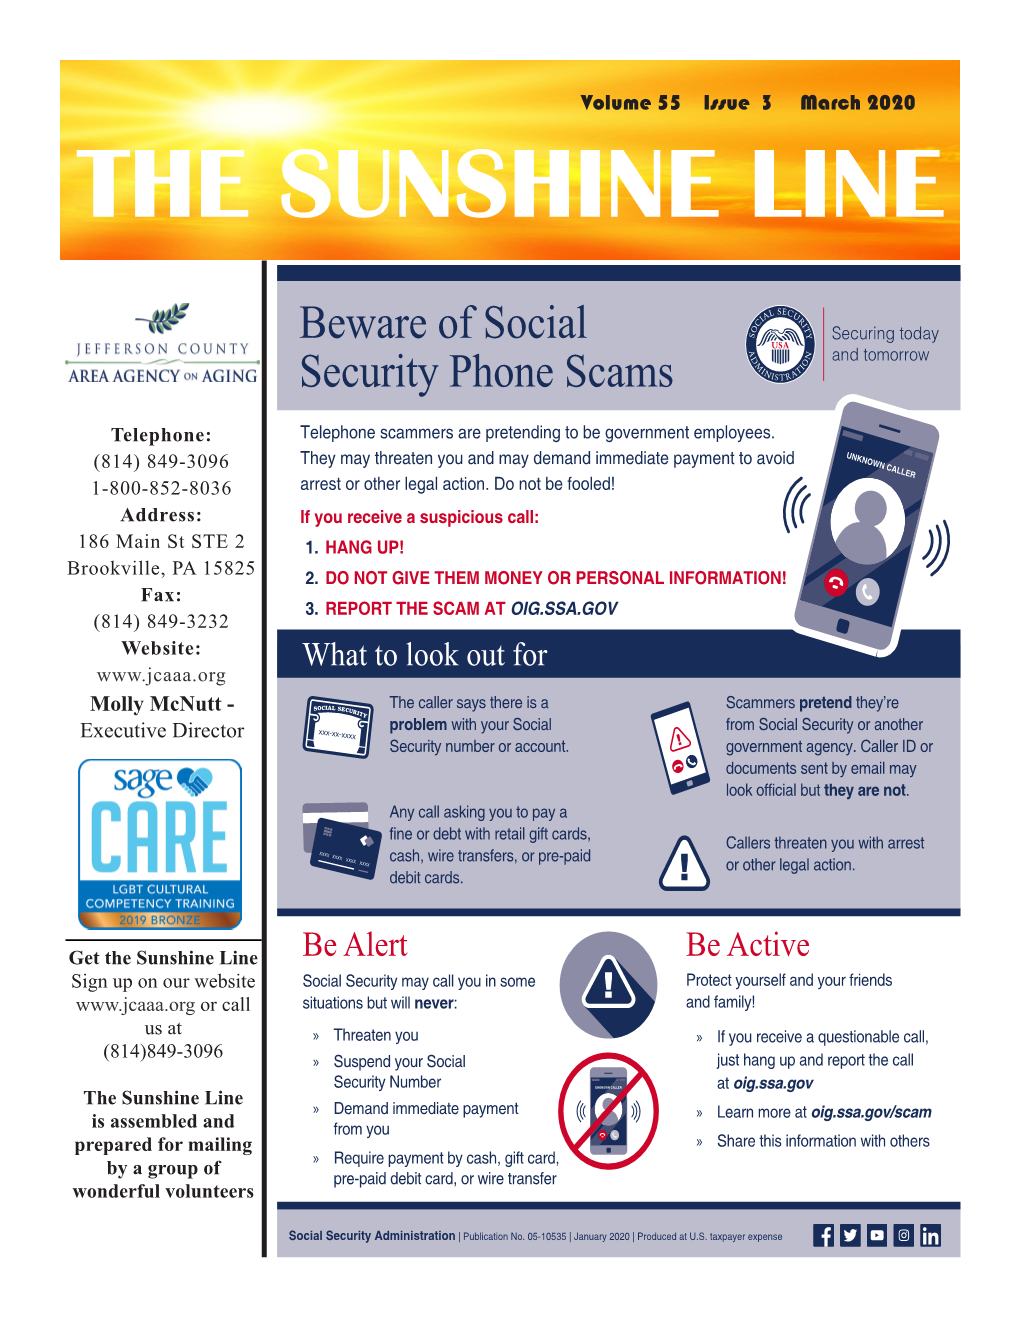 The Sunshine Line